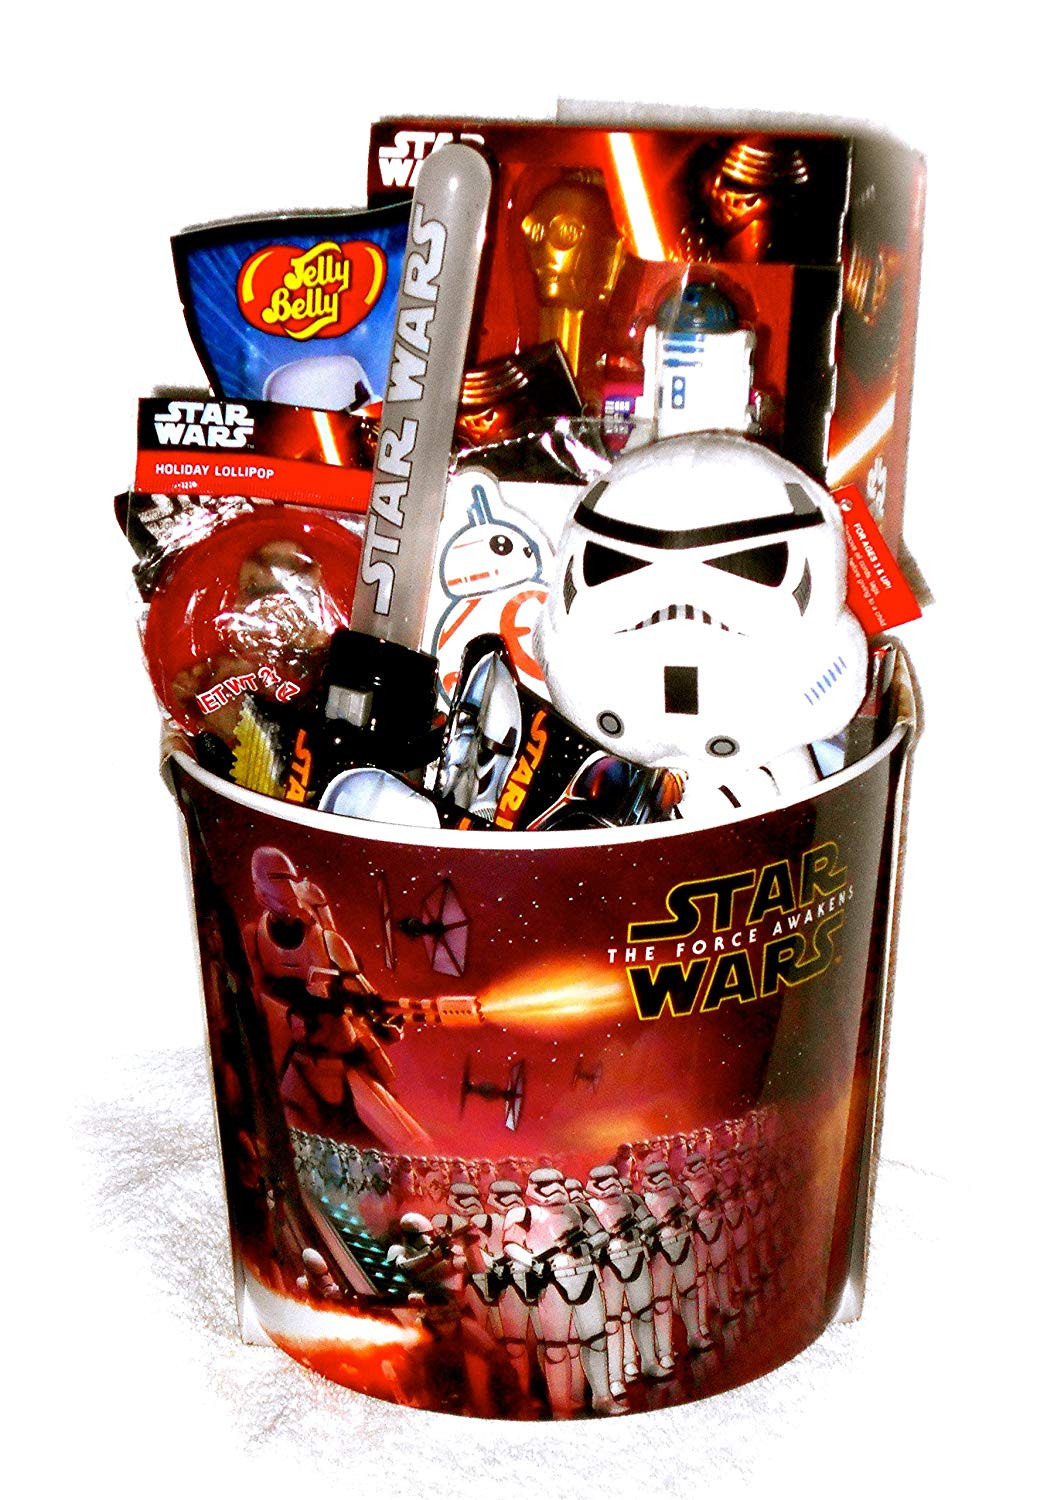 Star Wars Gift Basket Ideas
 Star Wars Easter Baskets